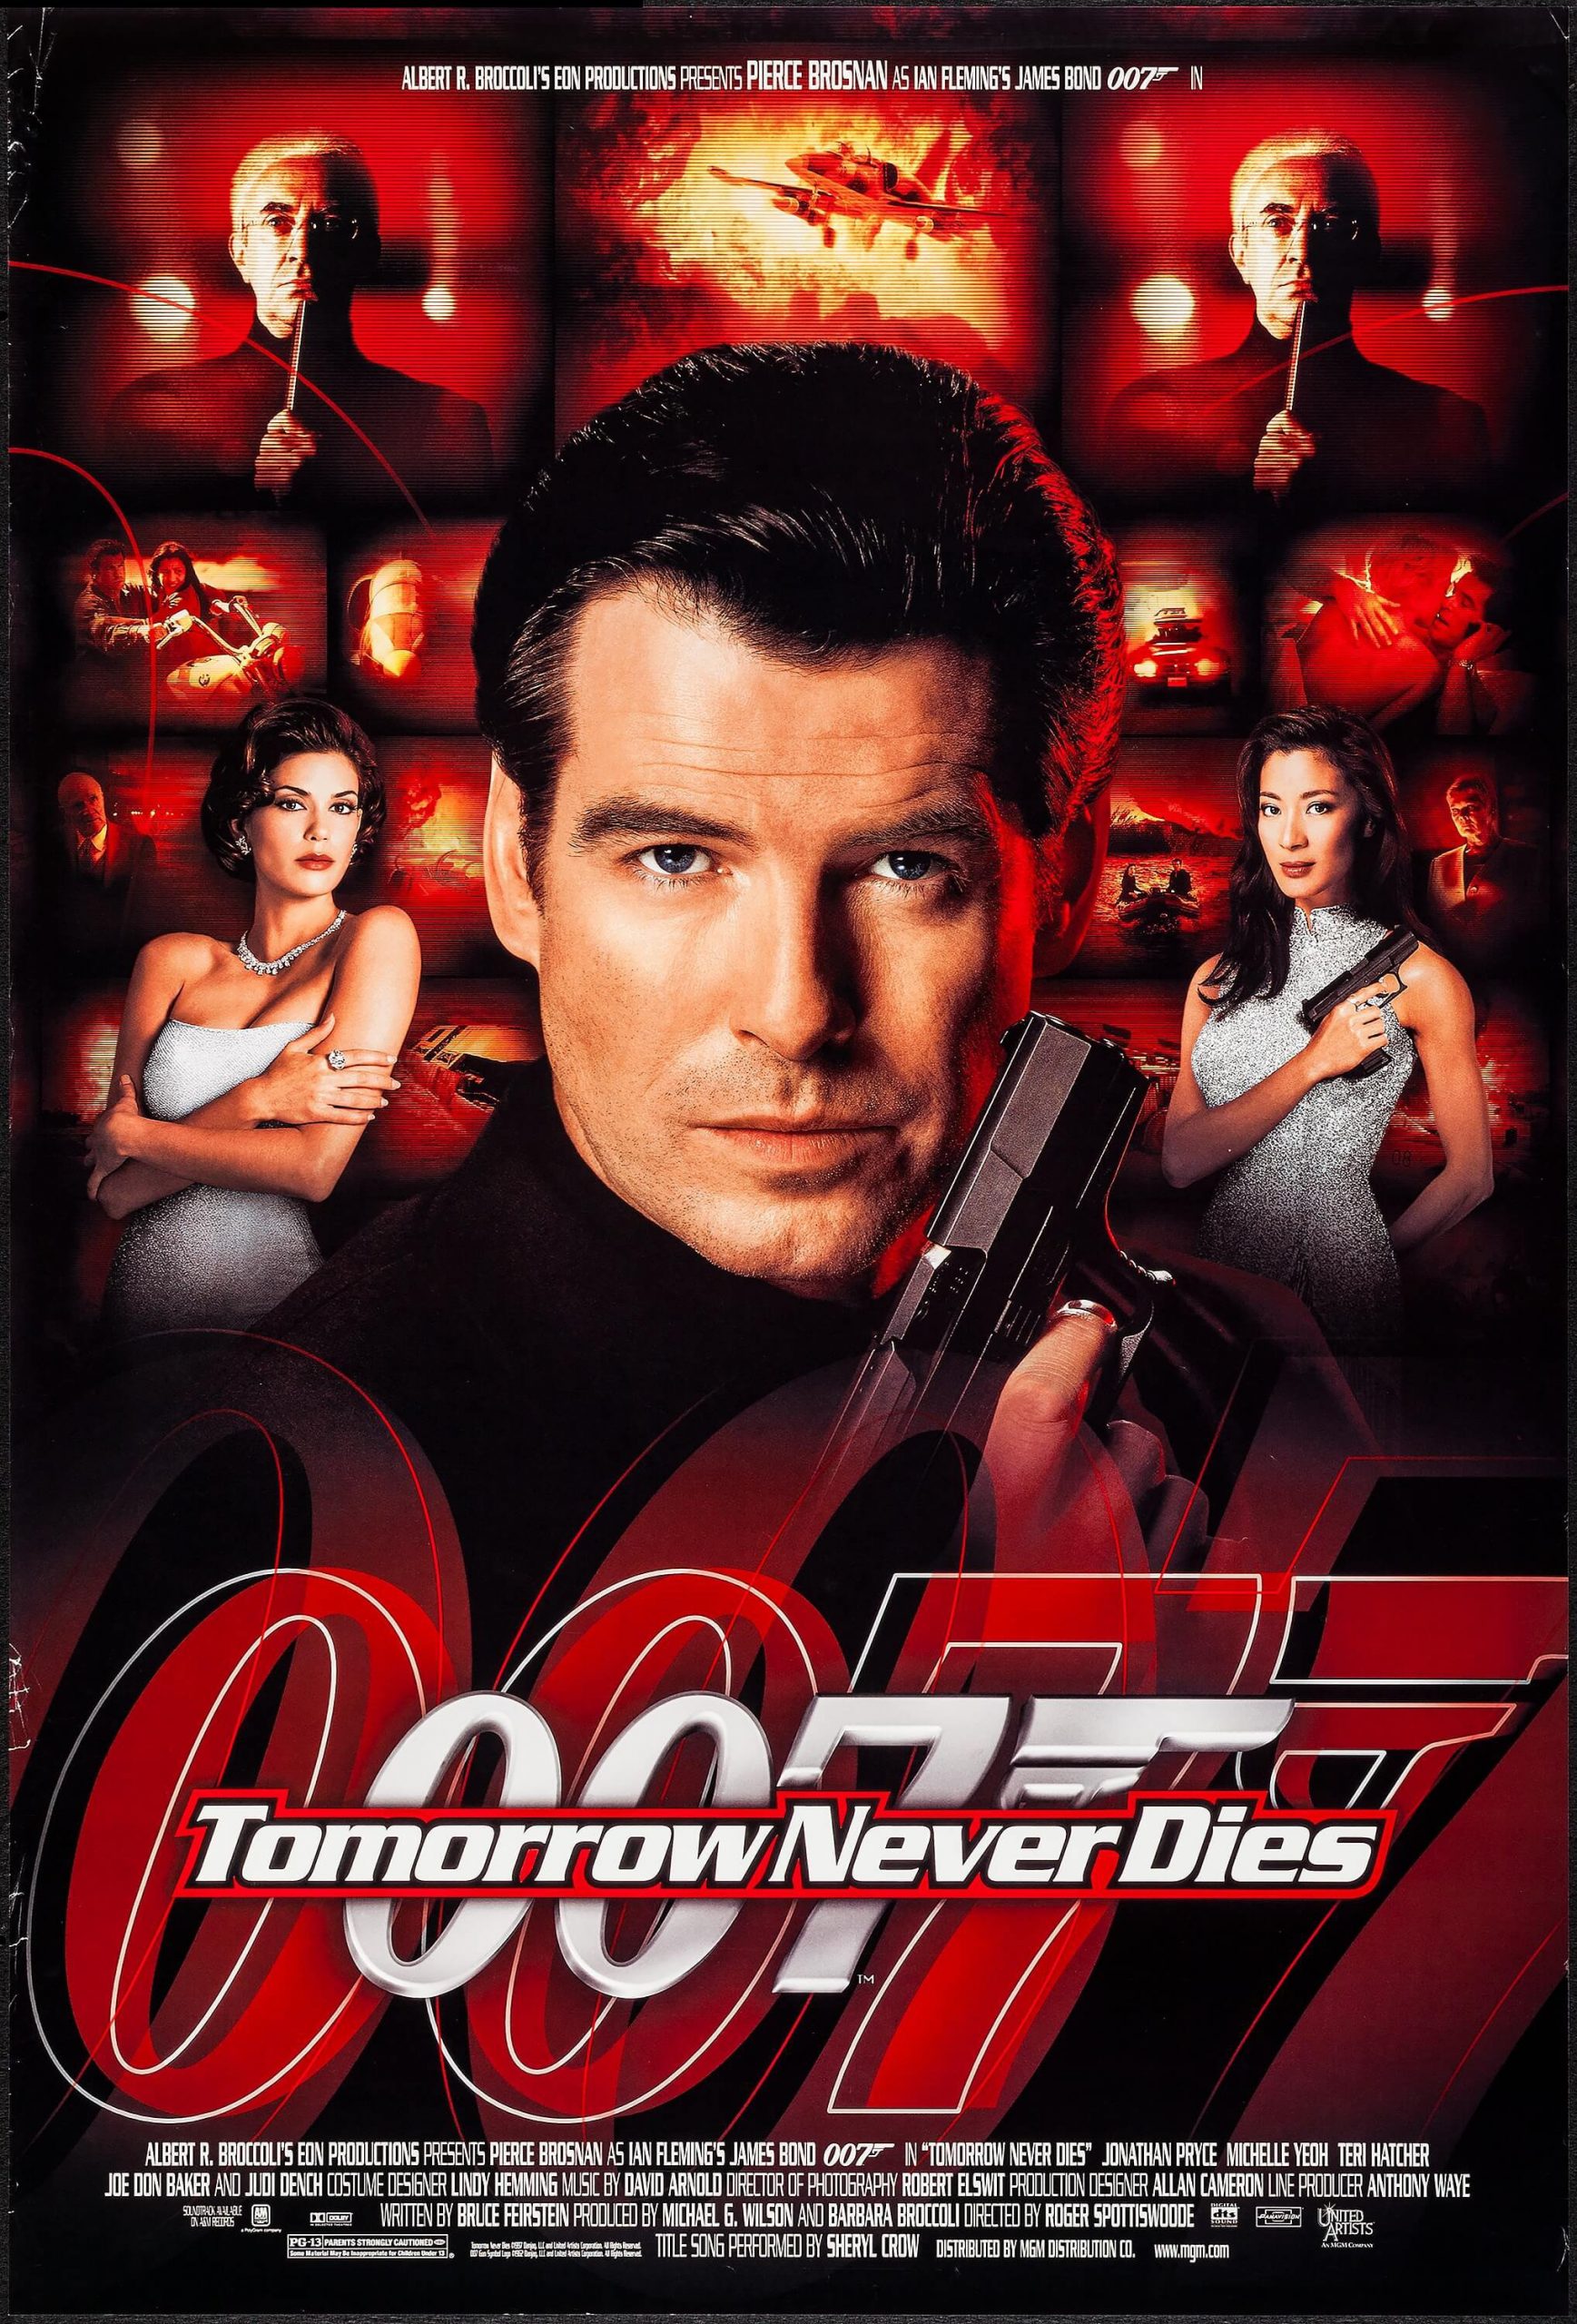 [James Bond] Tomorrow Never Dies (1997)